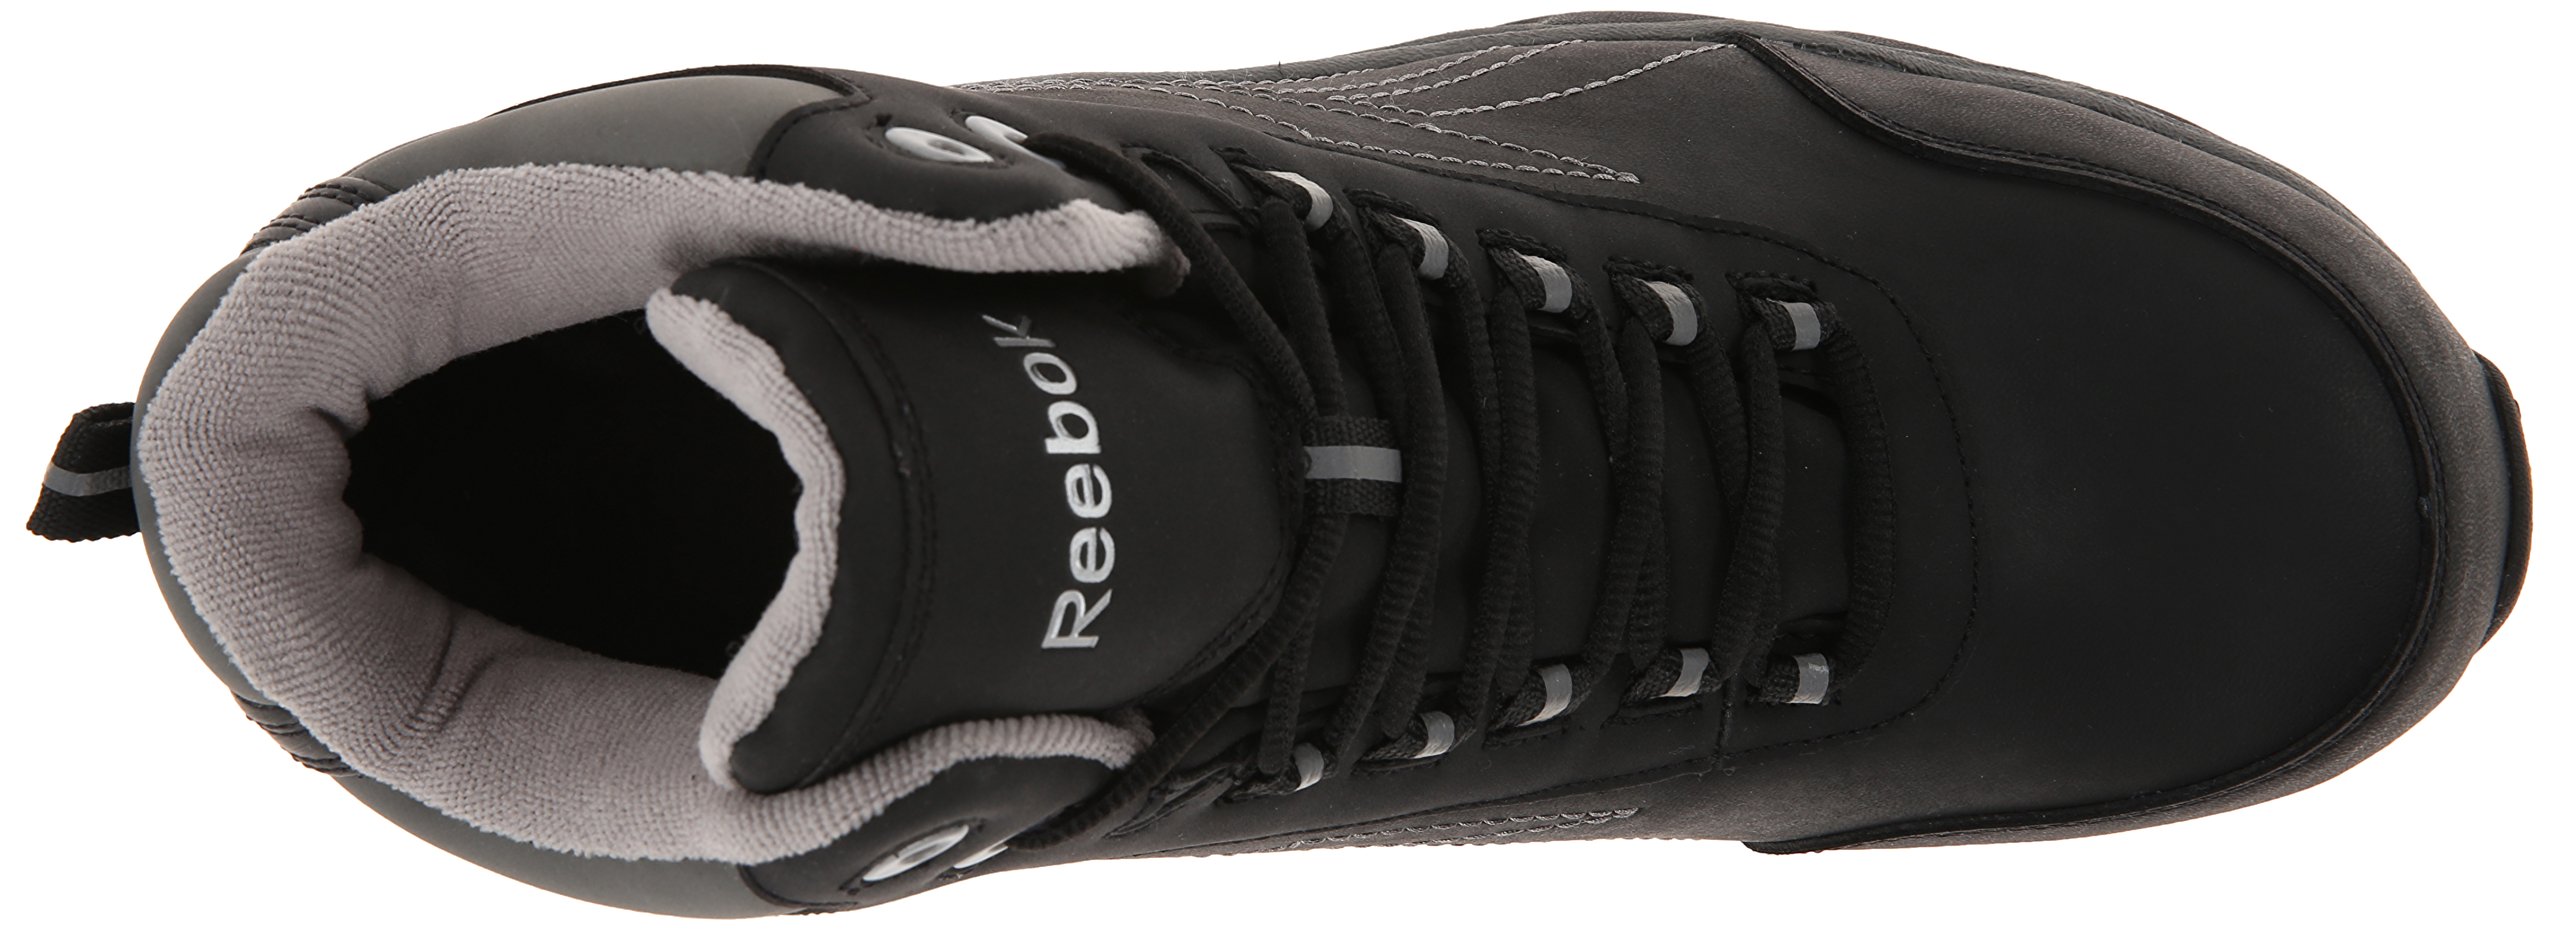 Reebok mens Beamer Safety Toe Waterproof Athletic Work Boot Industrial Construction Shoe, Black, 14 Wide US